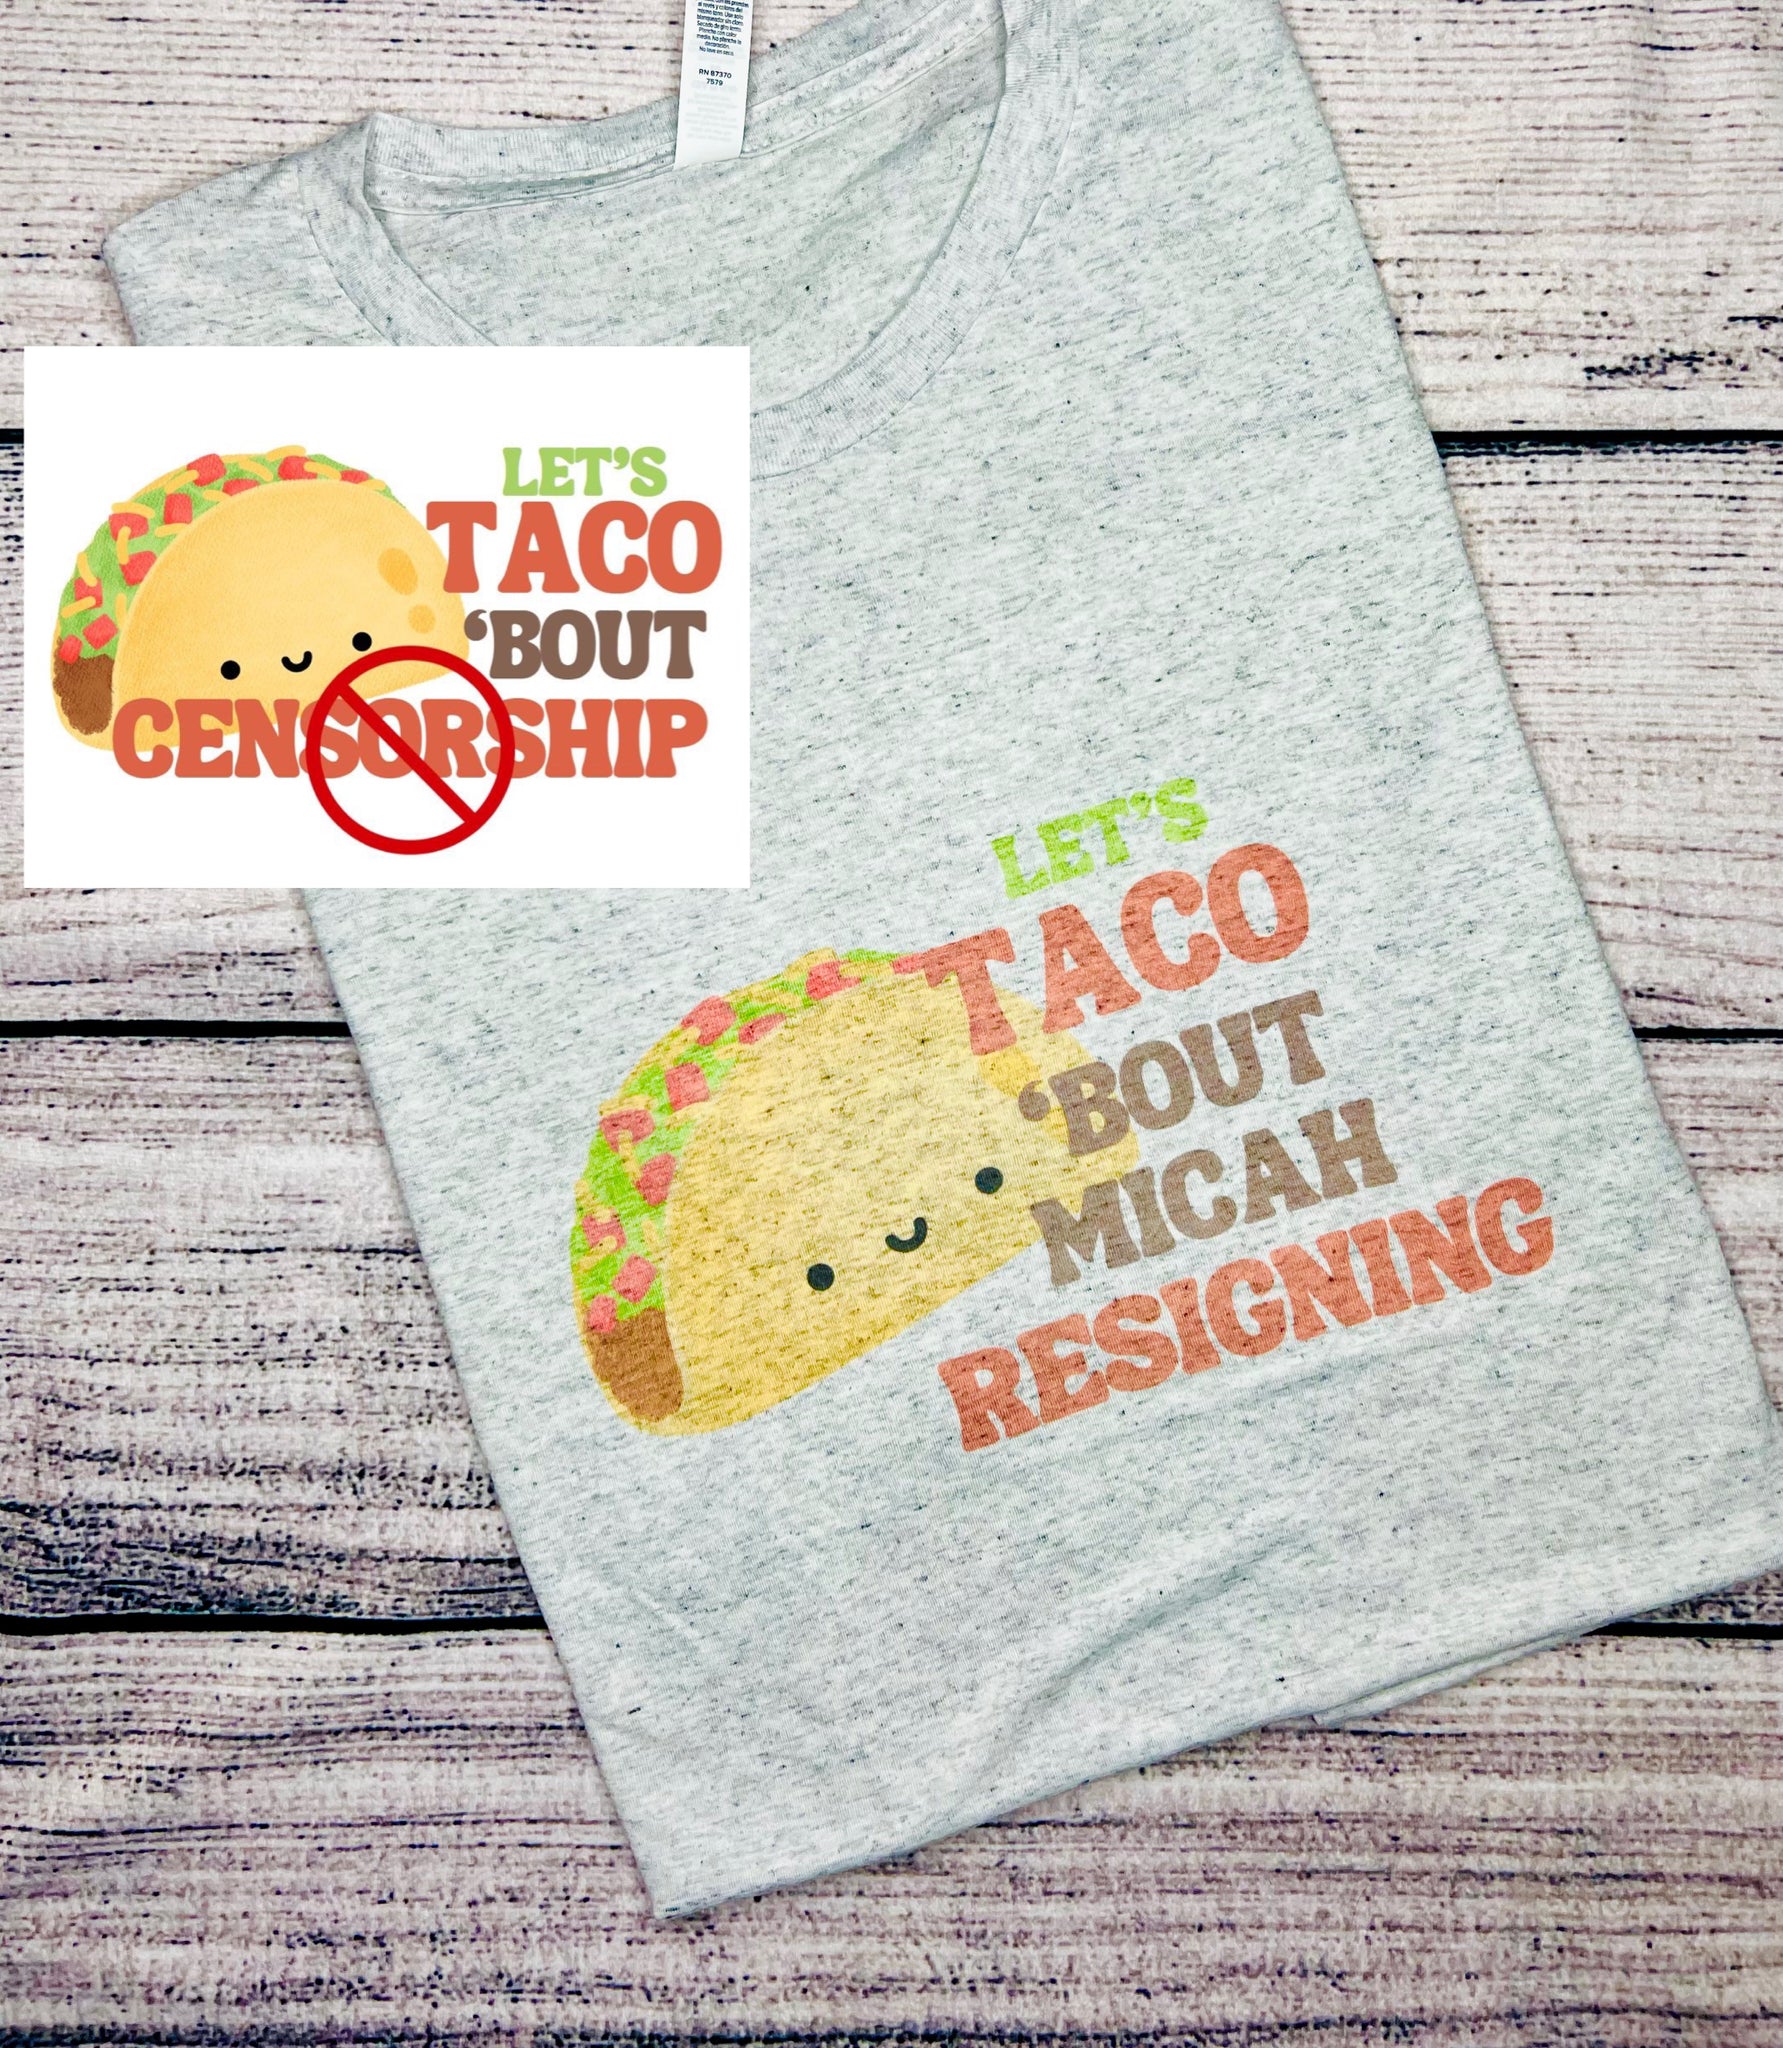 Let’s Taco ‘Bout Micah Resigning